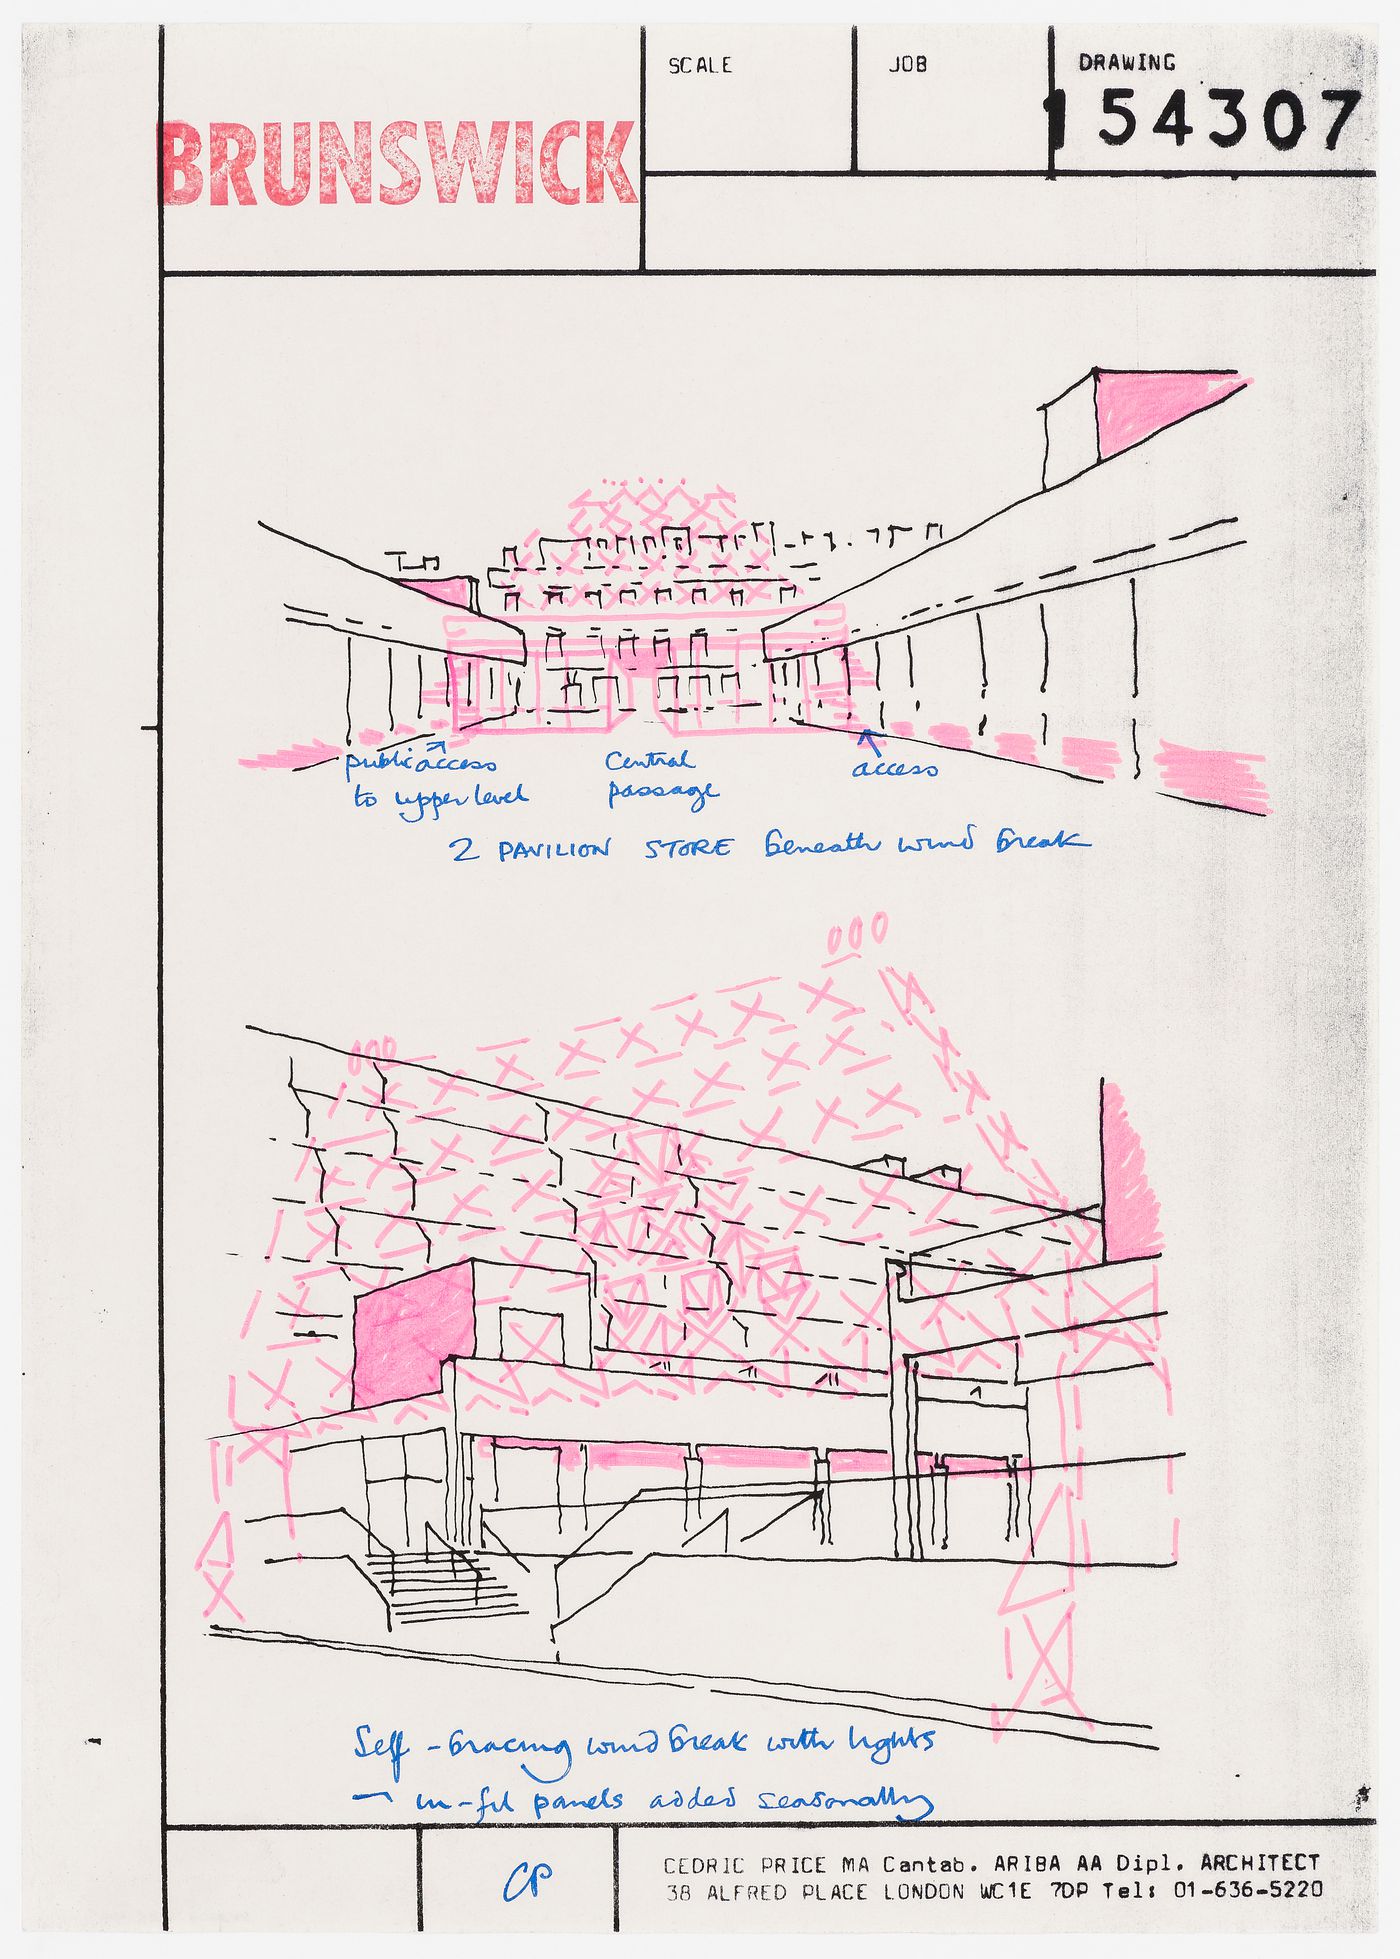 Brunswick: perspective sketches of "2 pavilion store beneath wind break" and "self-bracing wind break with lights"